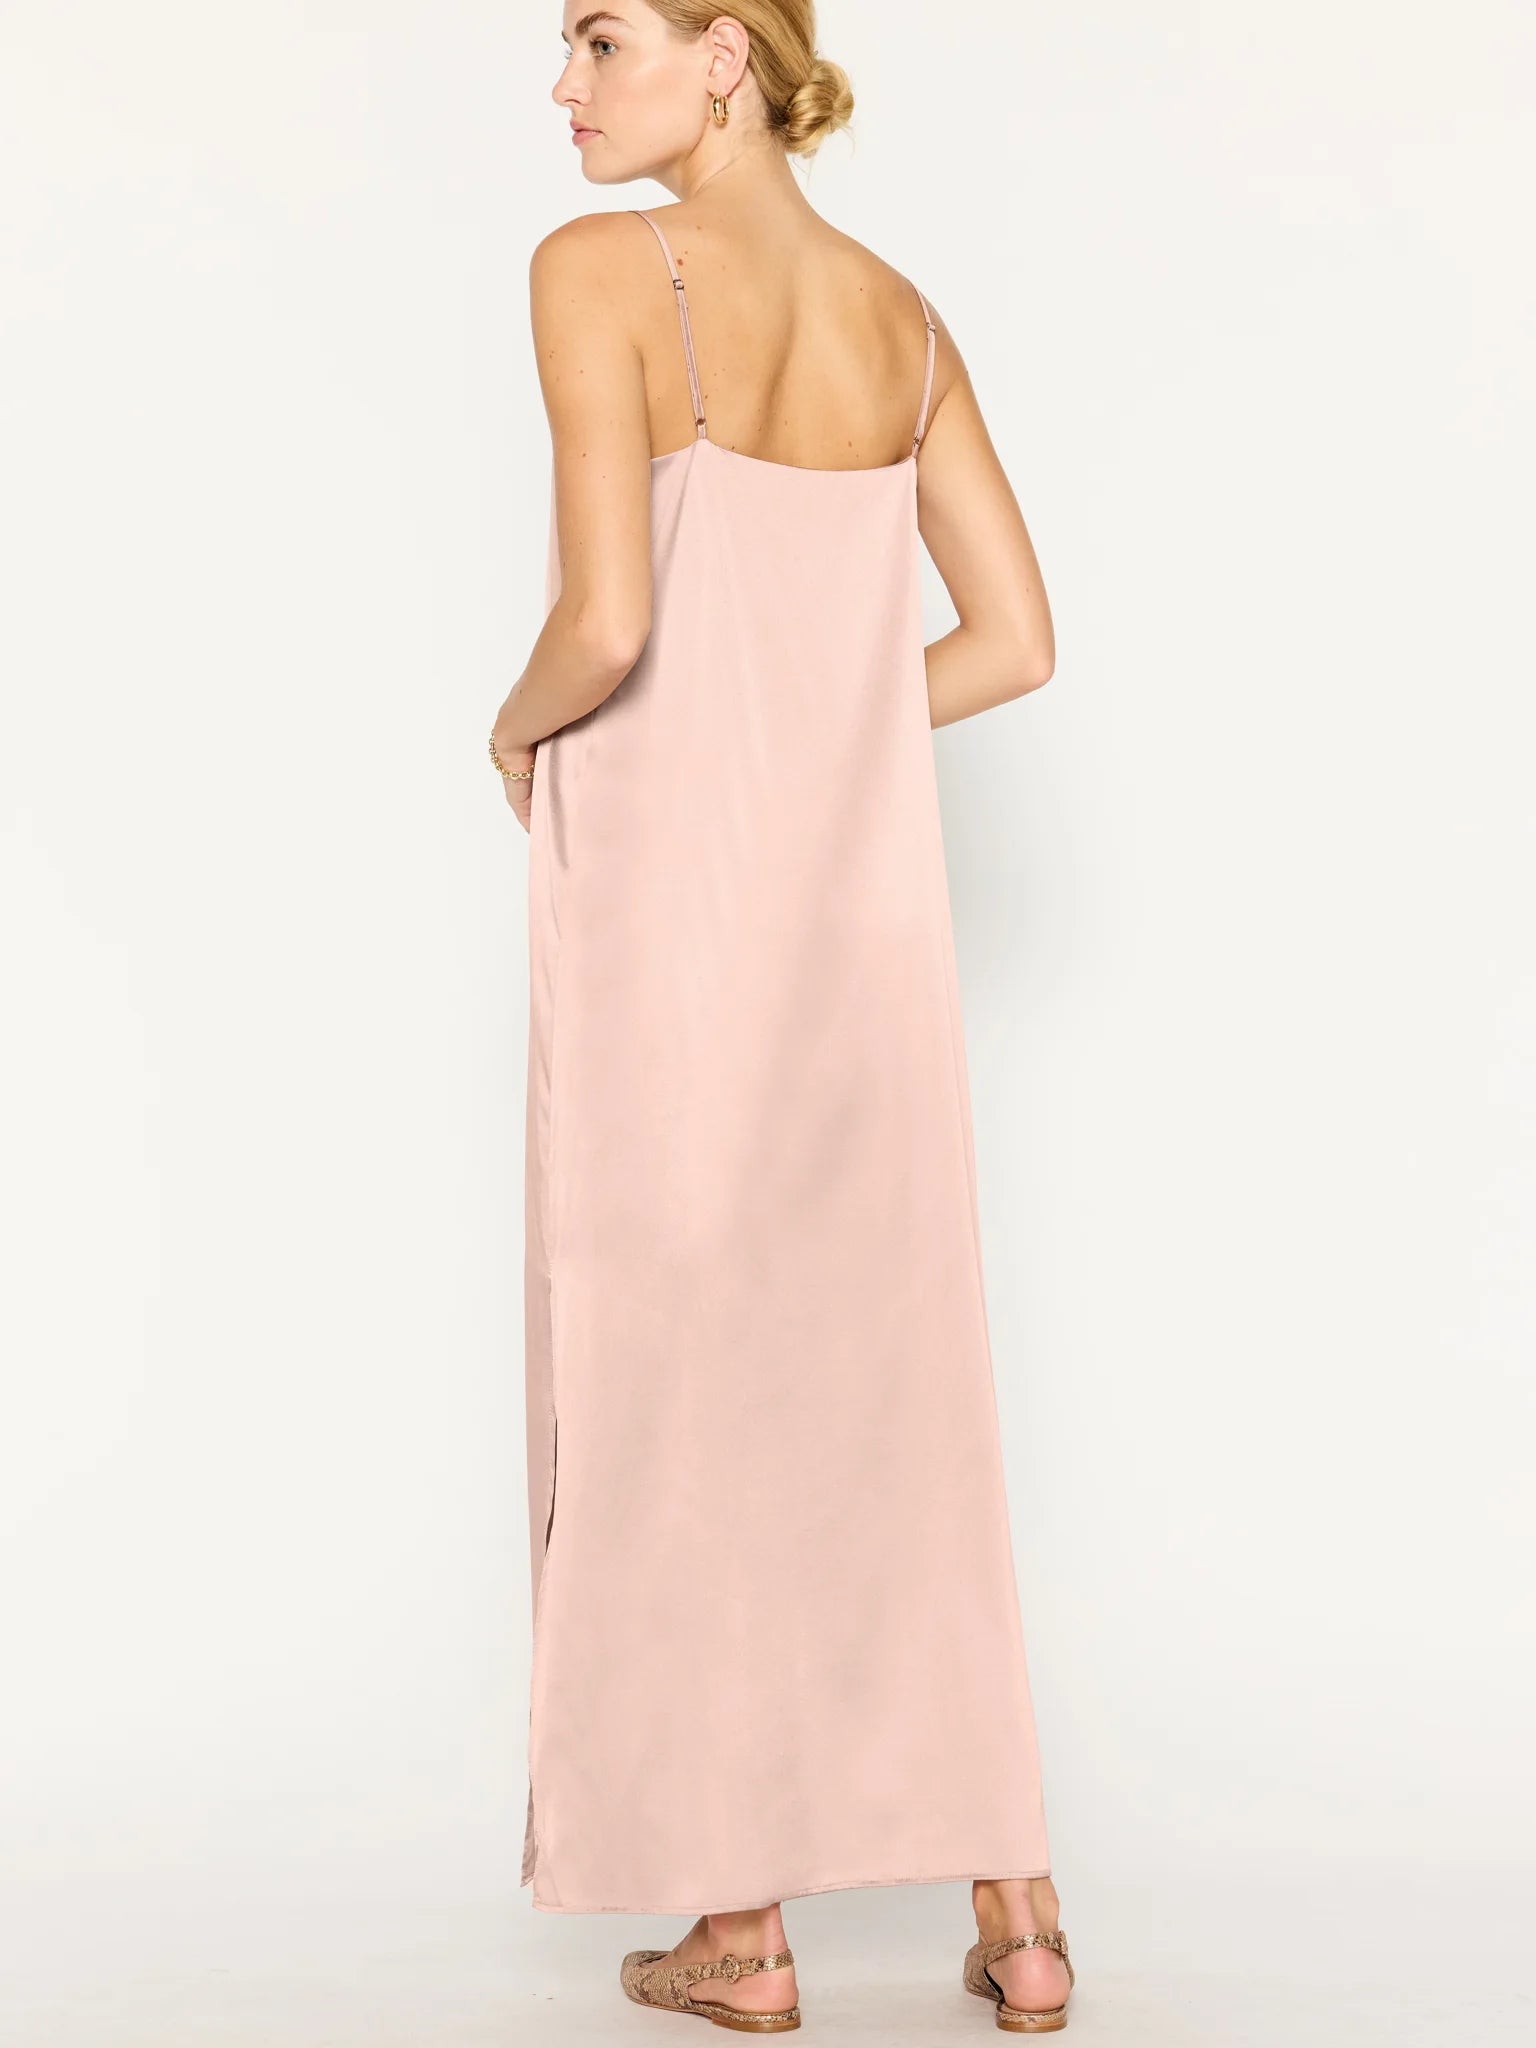 Everyday silk pink slip dress back view